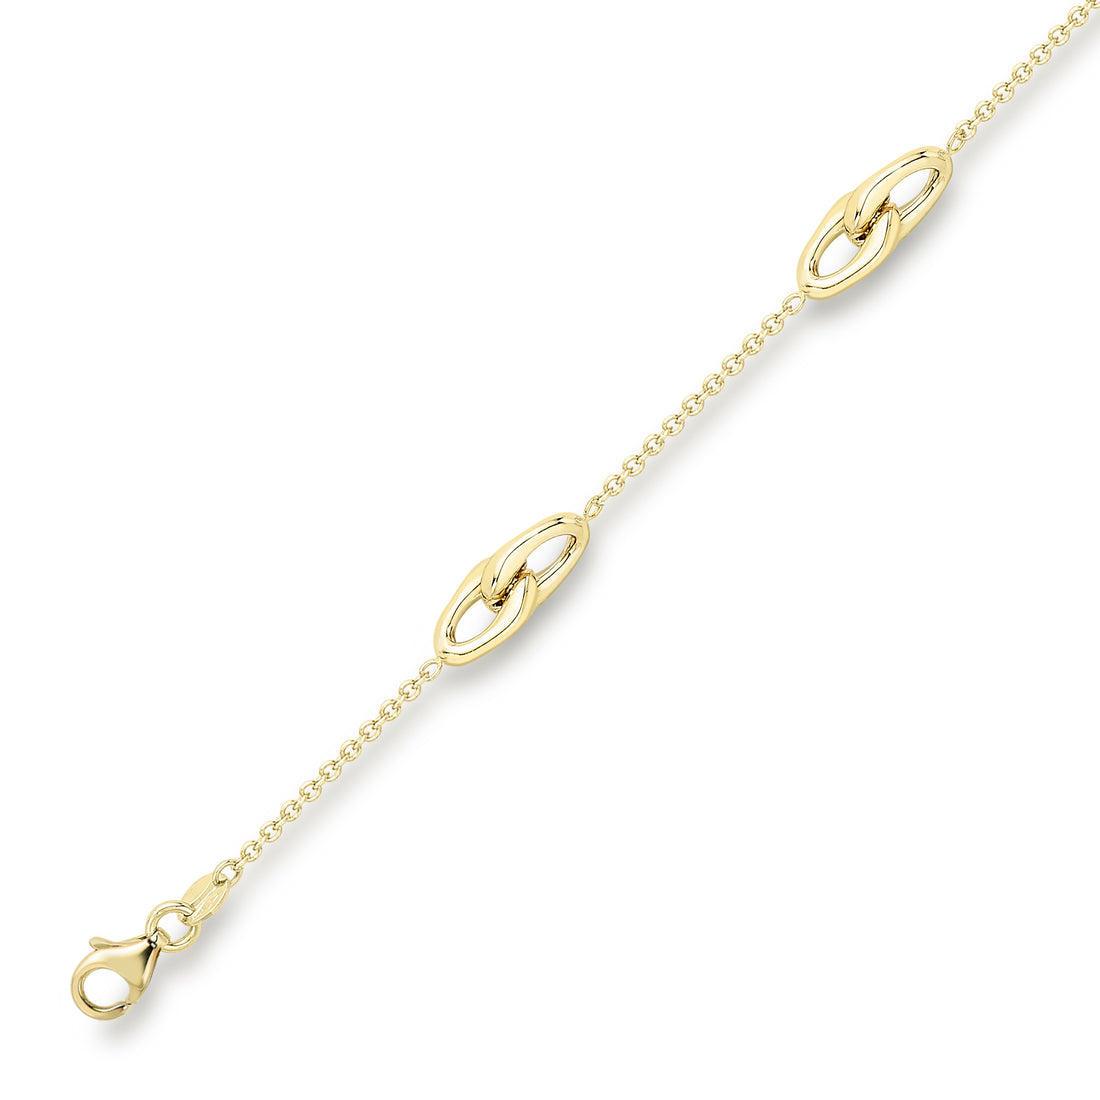 9ct. Yellow Gold Polished Interlocking Motif Bracelet - Robert Anthony Jewellers, Edinburgh